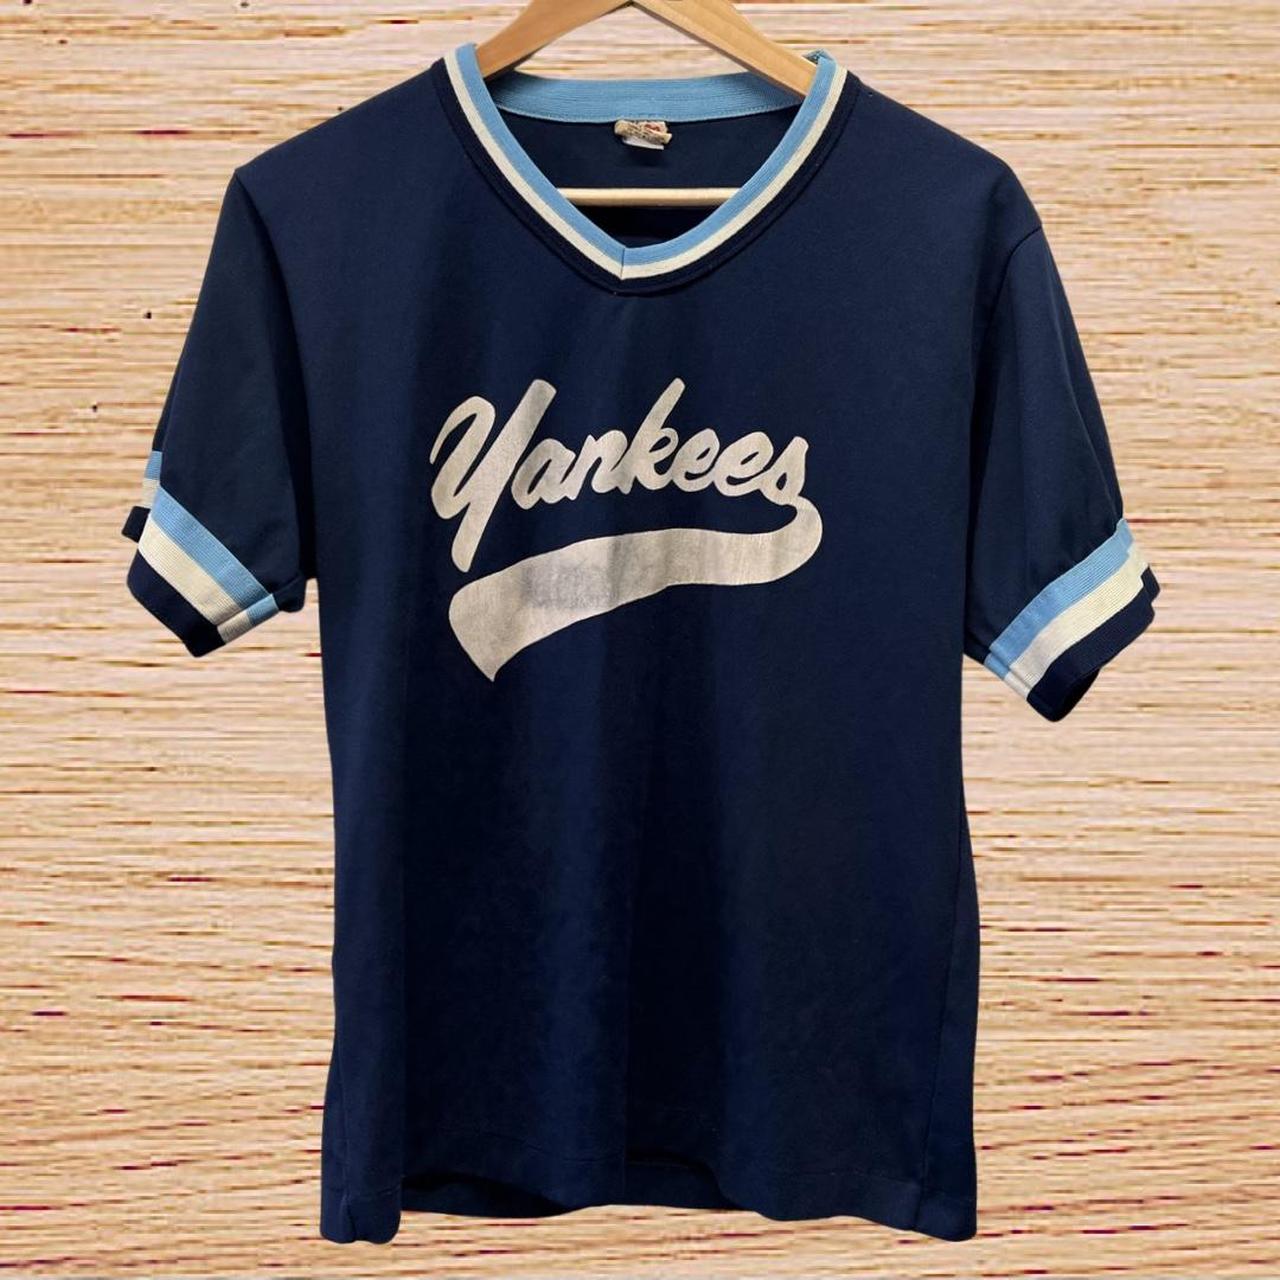 25 yankees jersey